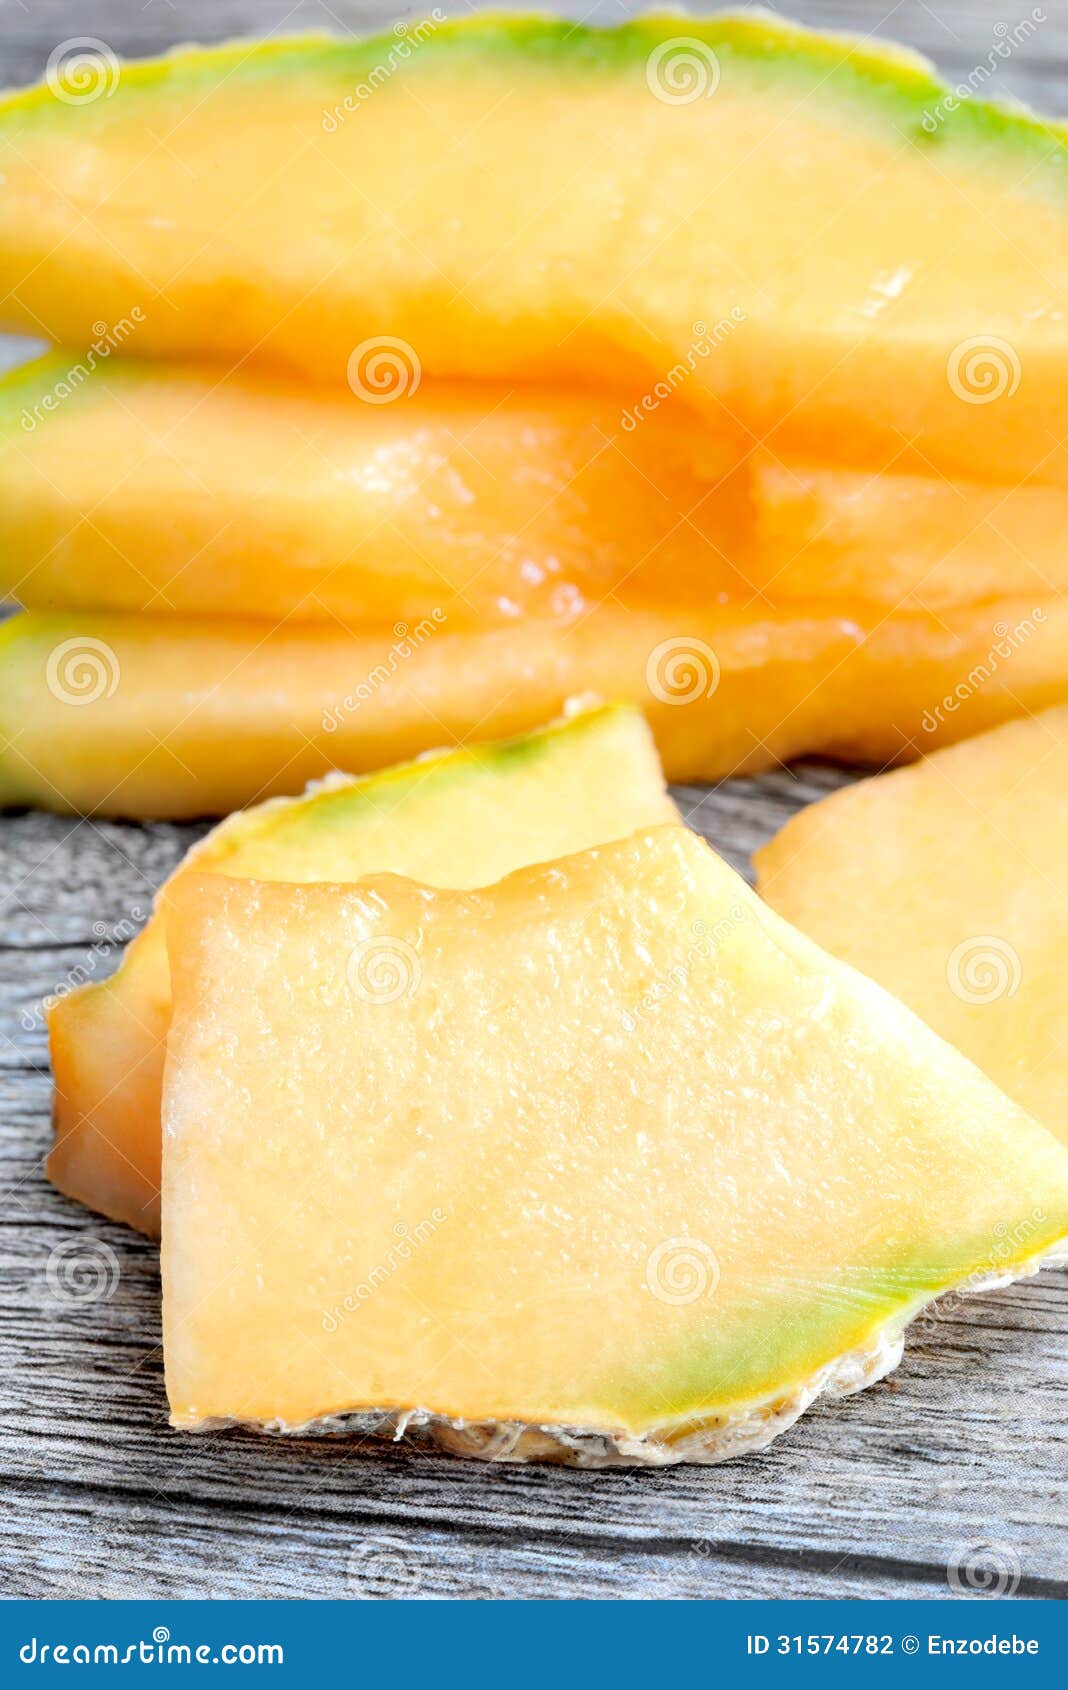 cantalupo melon